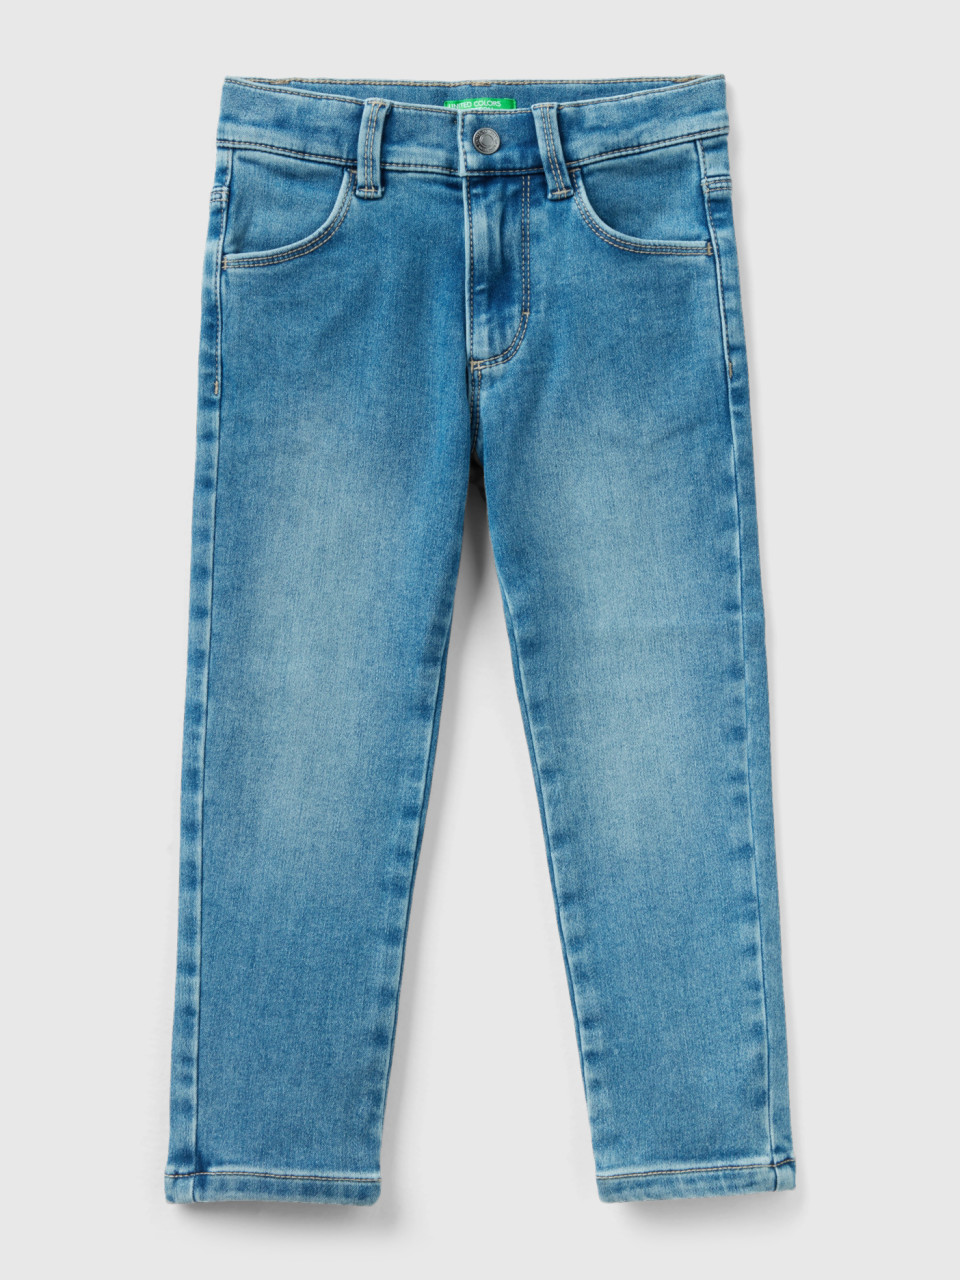 Benetton, Thermal Skinny Fit Jeans, Light Blue, Kids